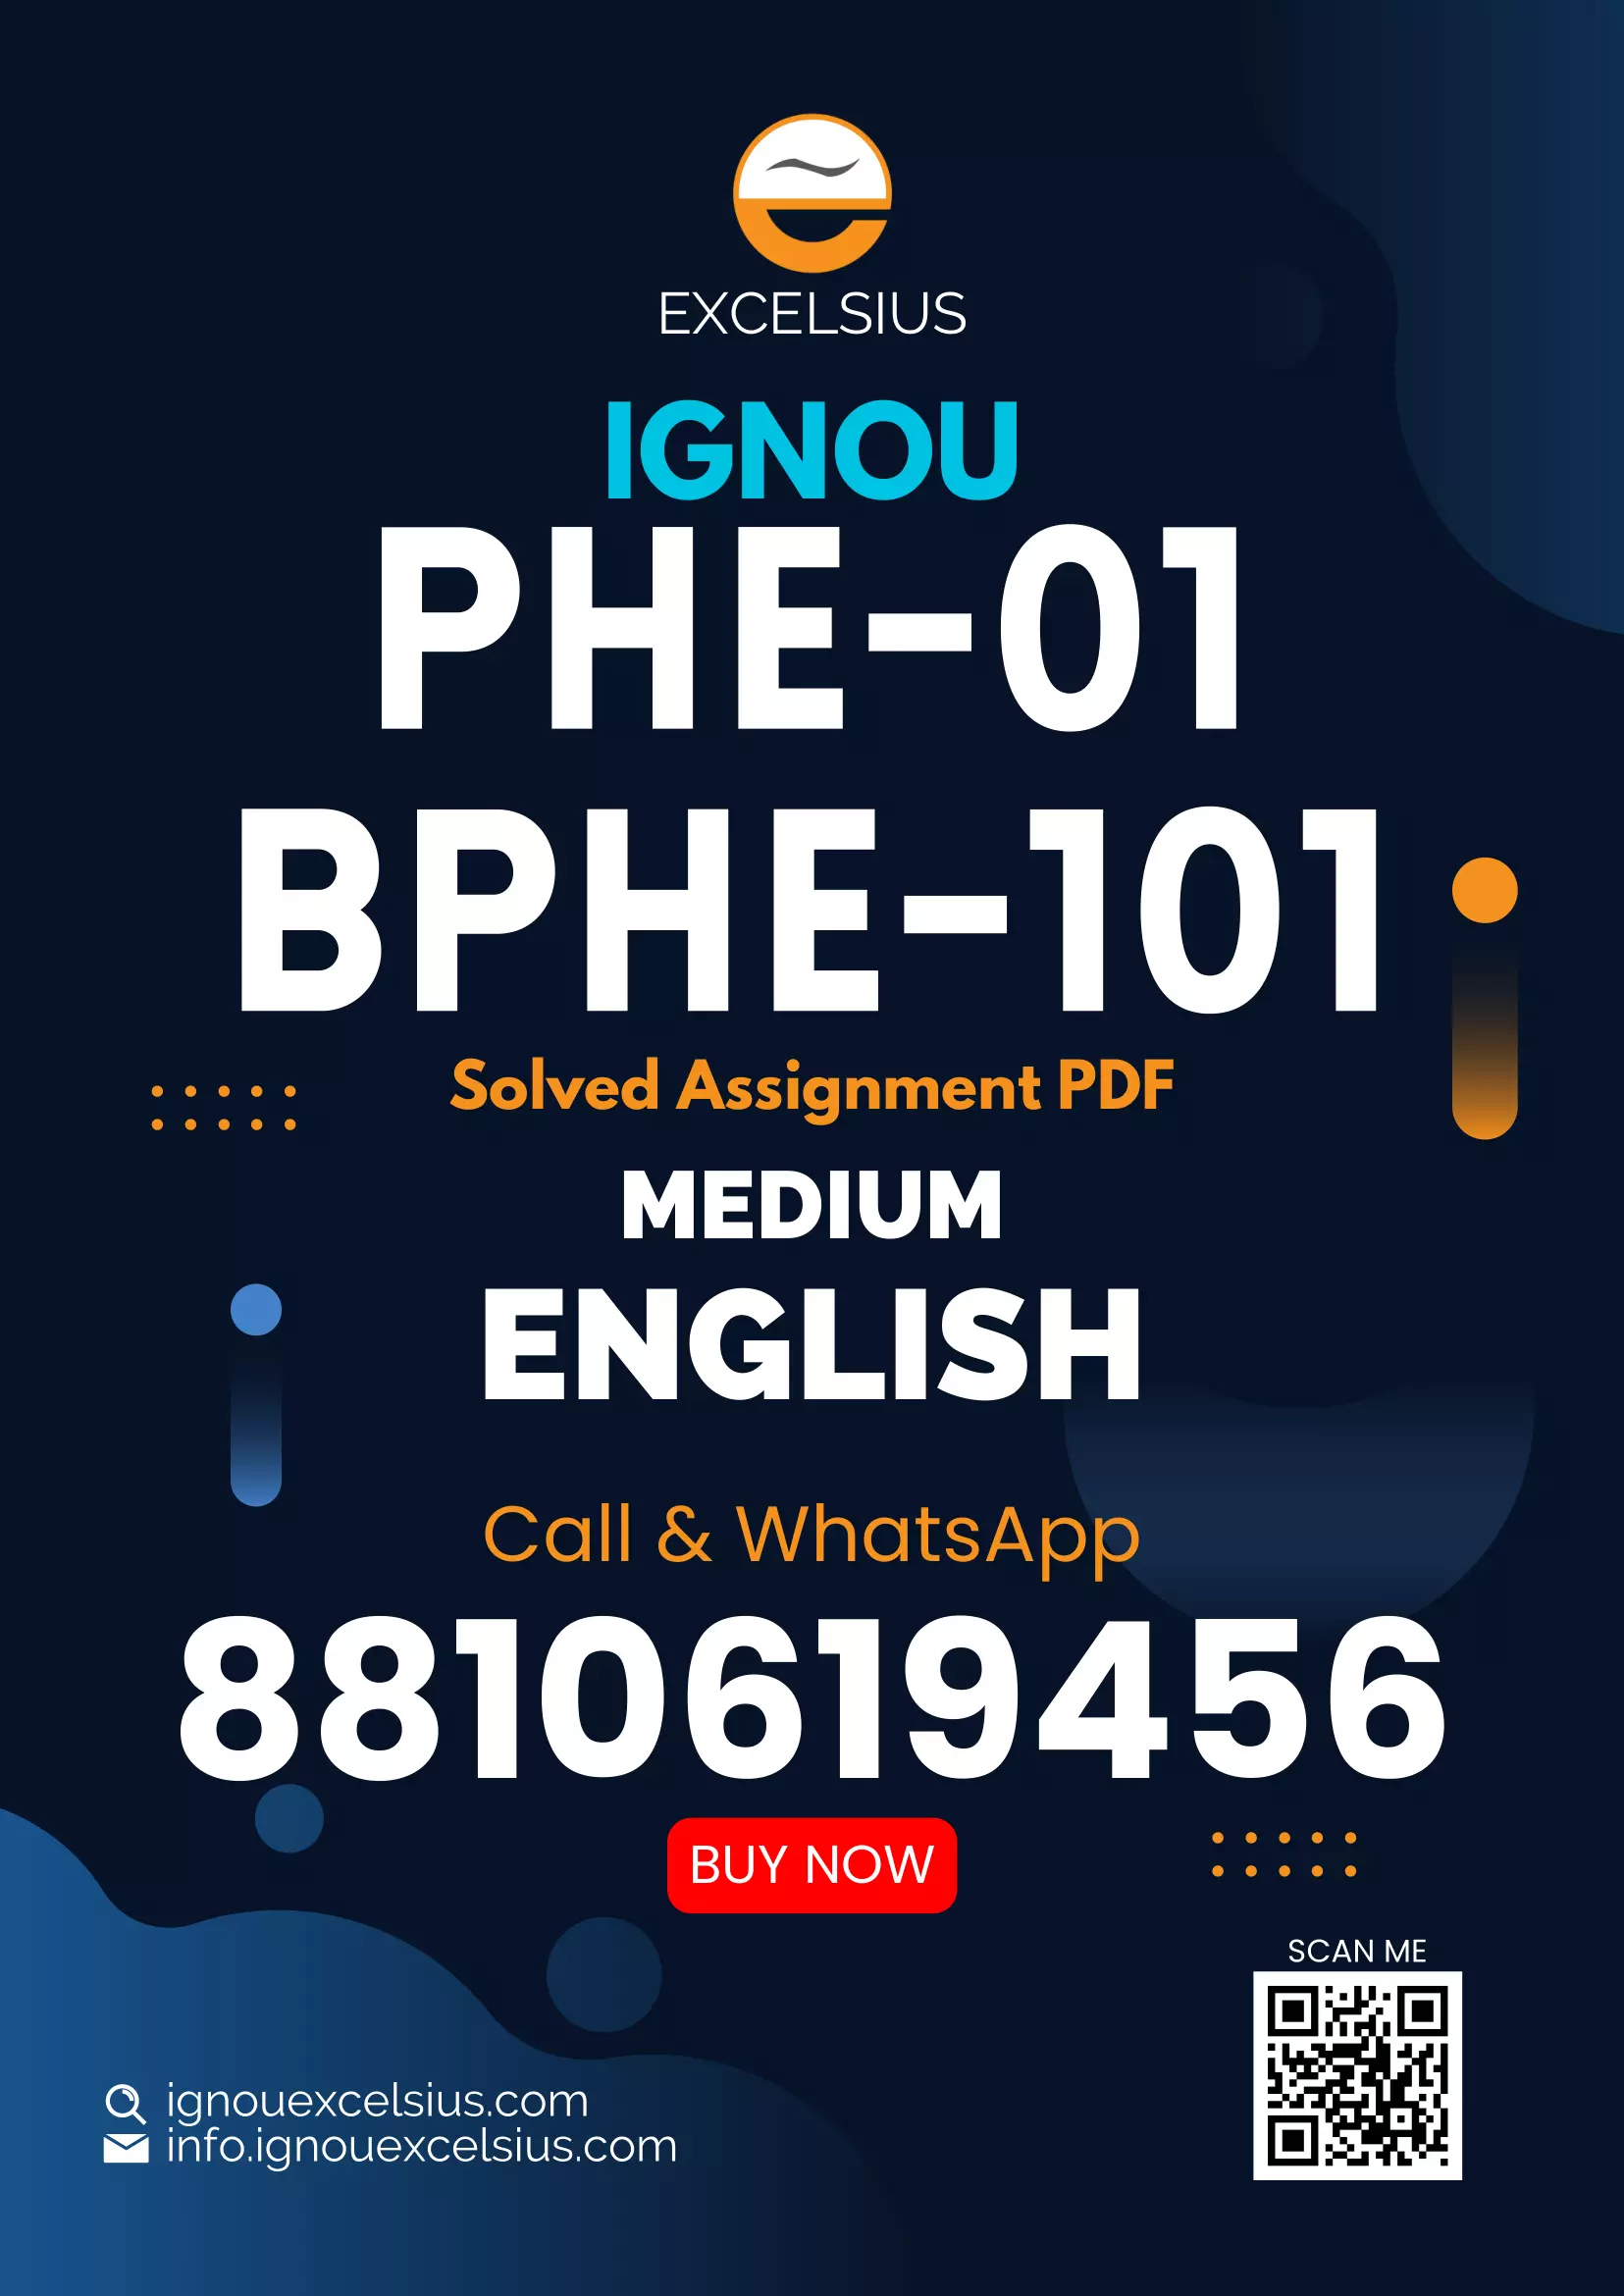 IGNOU BPHE-101/PHE-01 - Elementary Mechanics, Latest Solved Assignment-January 2023 - December 2023